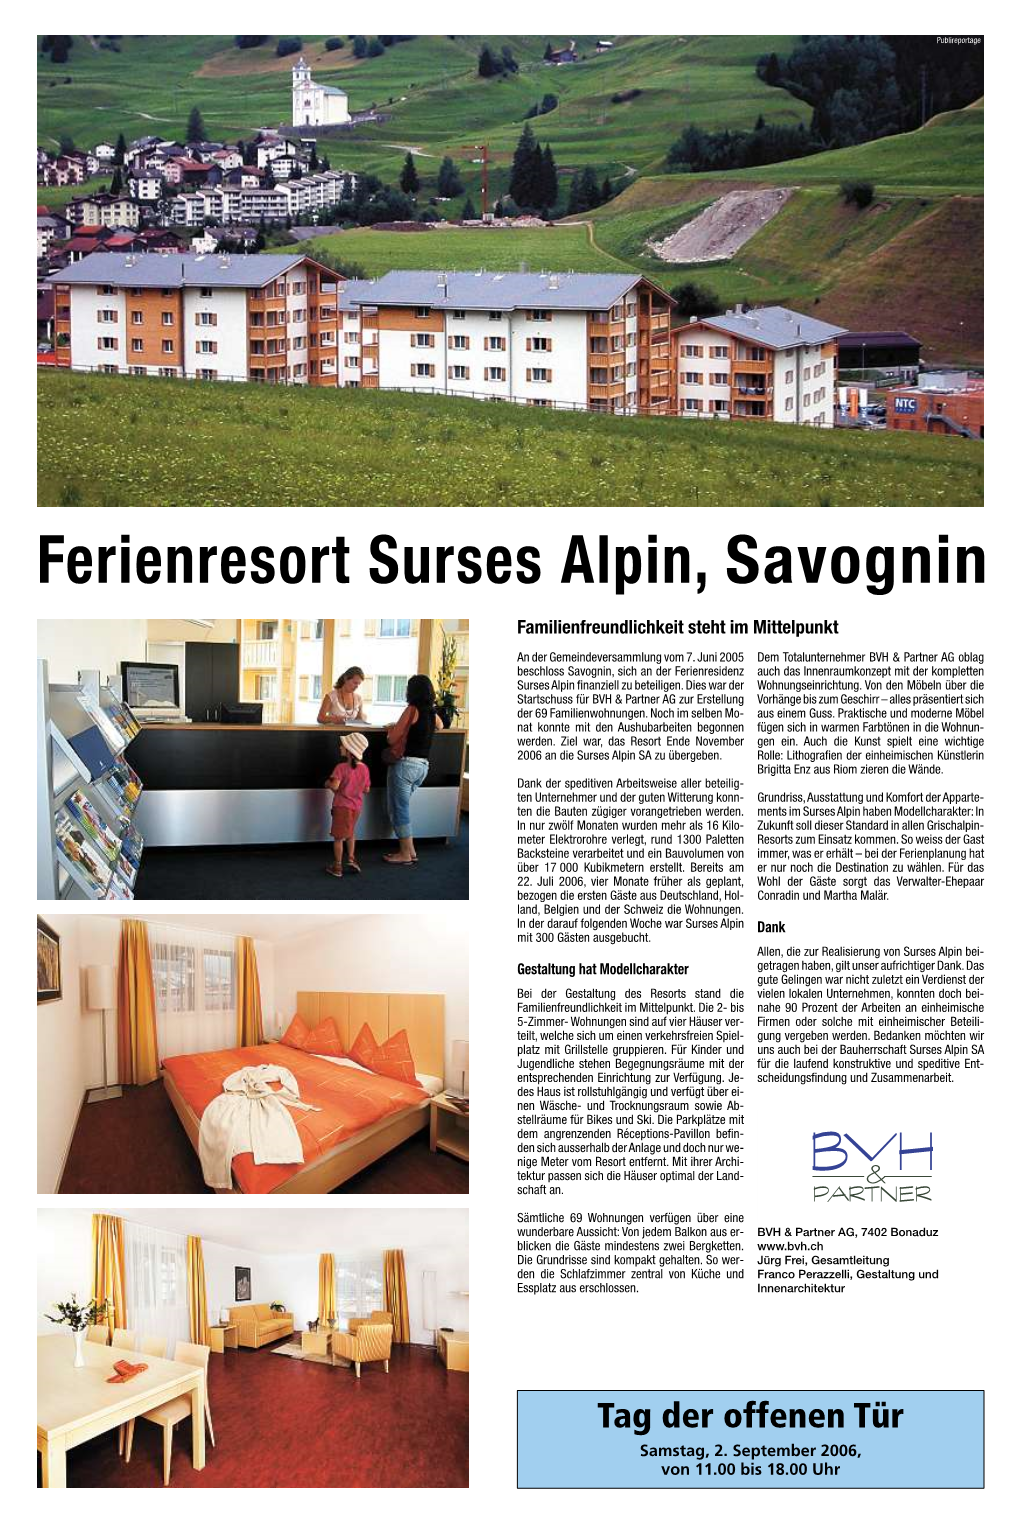 Ferienresort Surses Alpin, Savognin